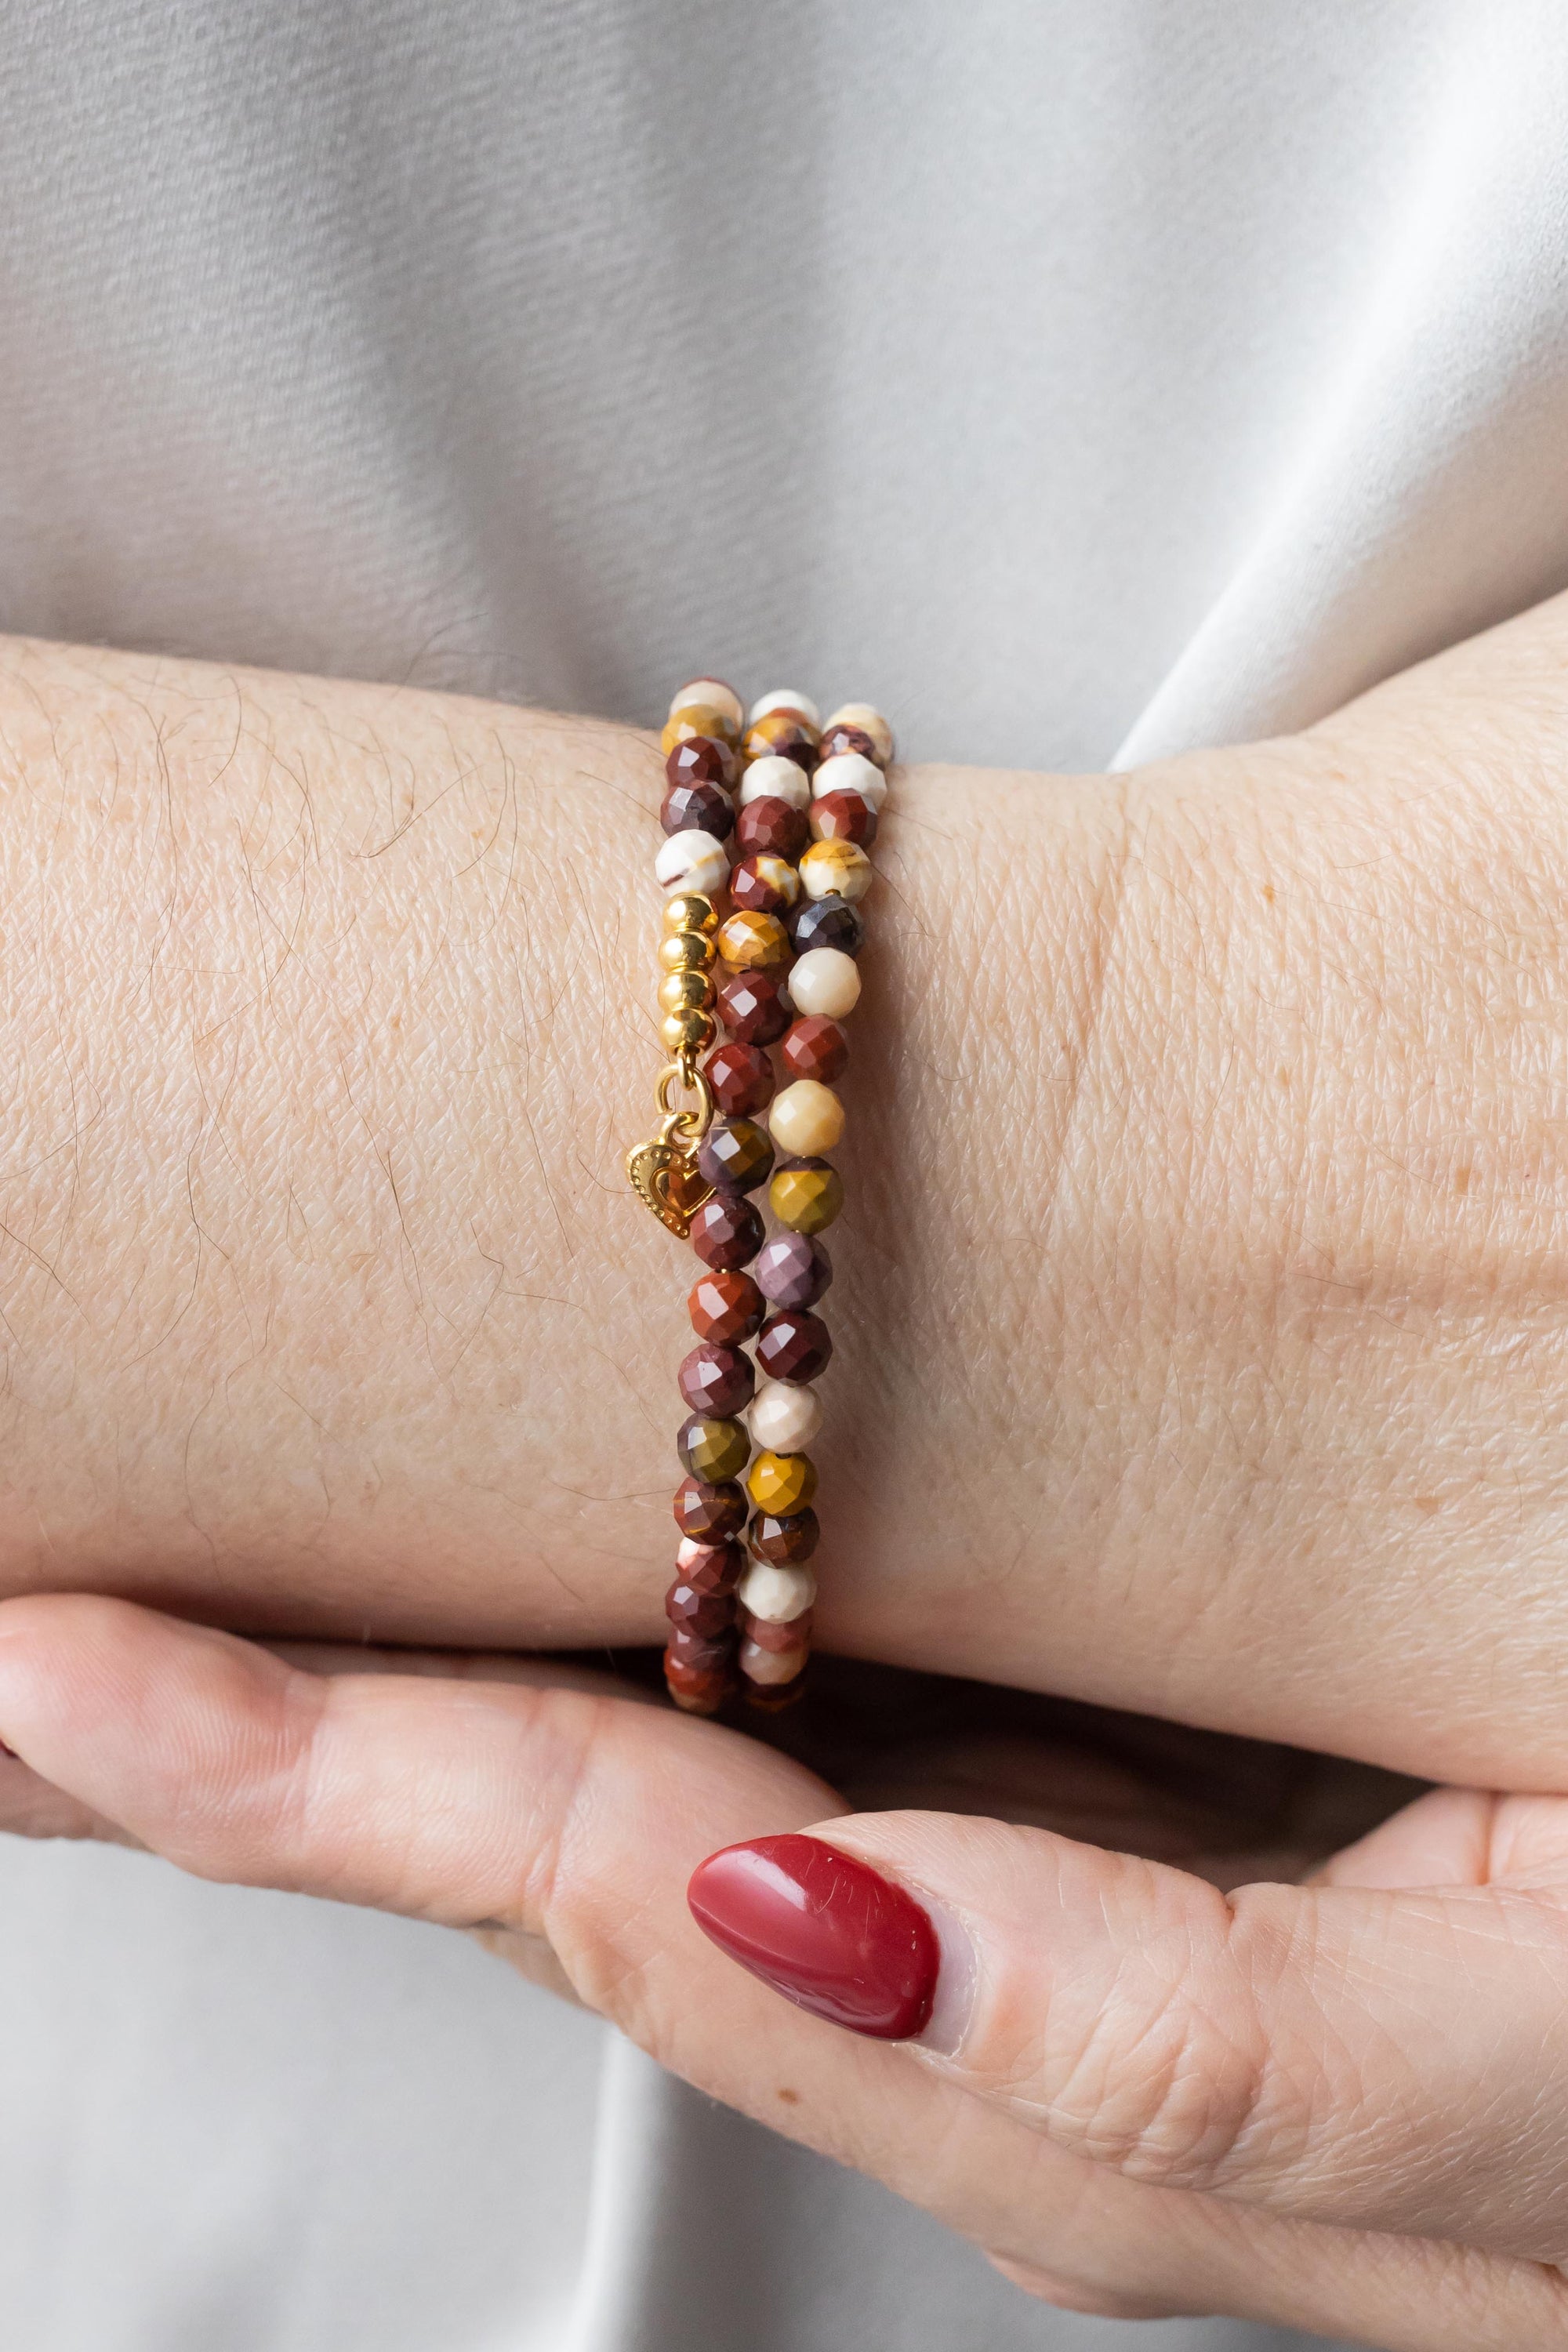 bracelet mokaïte, bracelet spirituel, bijoux en mokaïte,bracelet pour la résilience